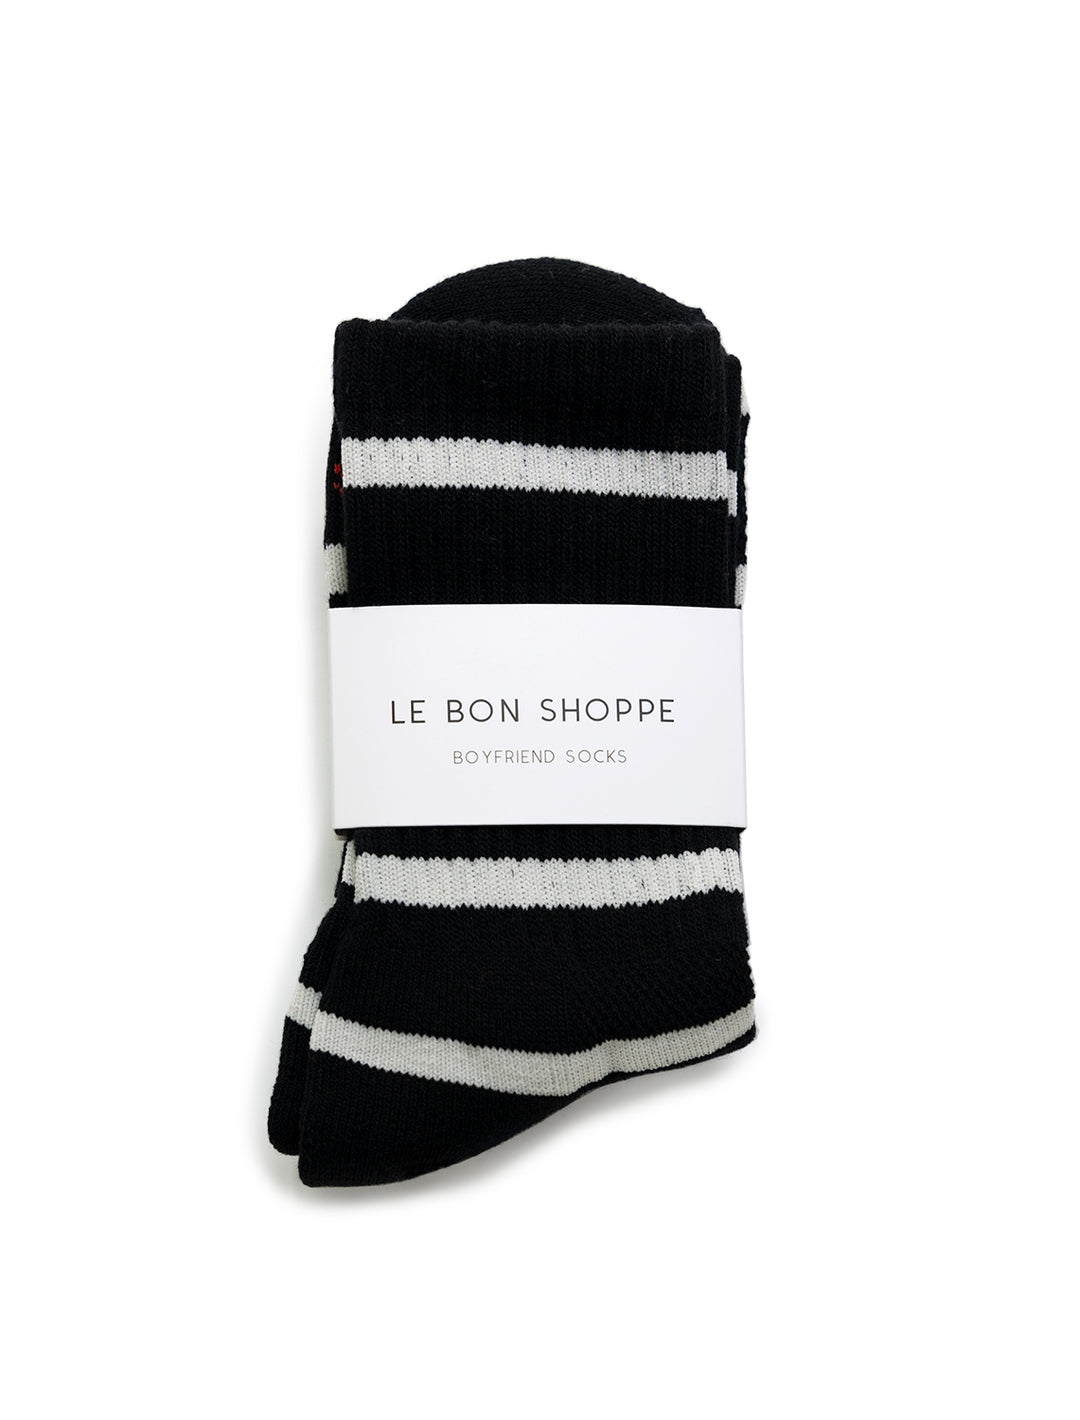 Le Bon Shoppe's striped boyfriend socks in black.